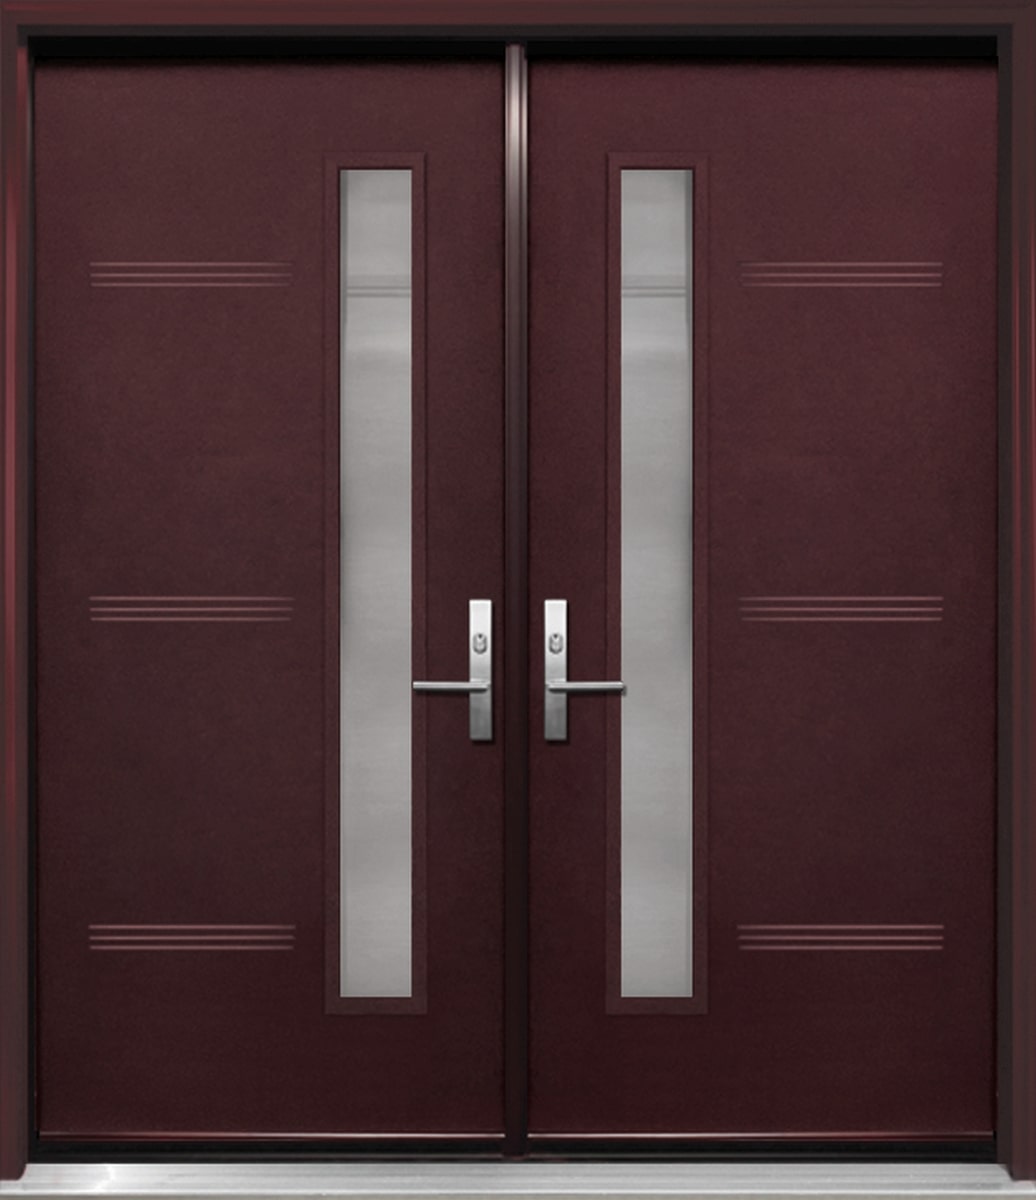 #114_Steel Double Door with glass inserts